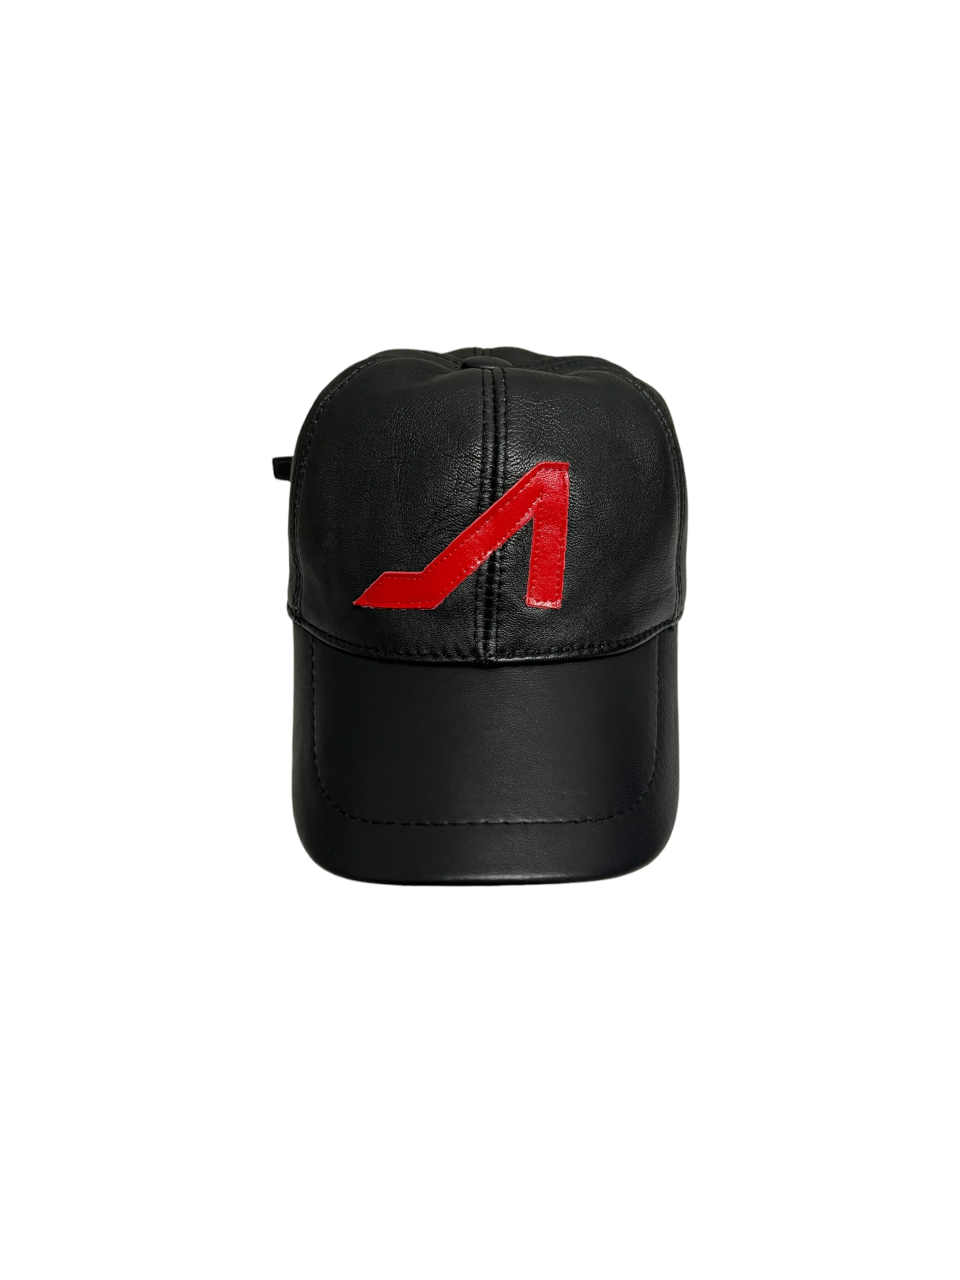 Apoli Black hat red logo